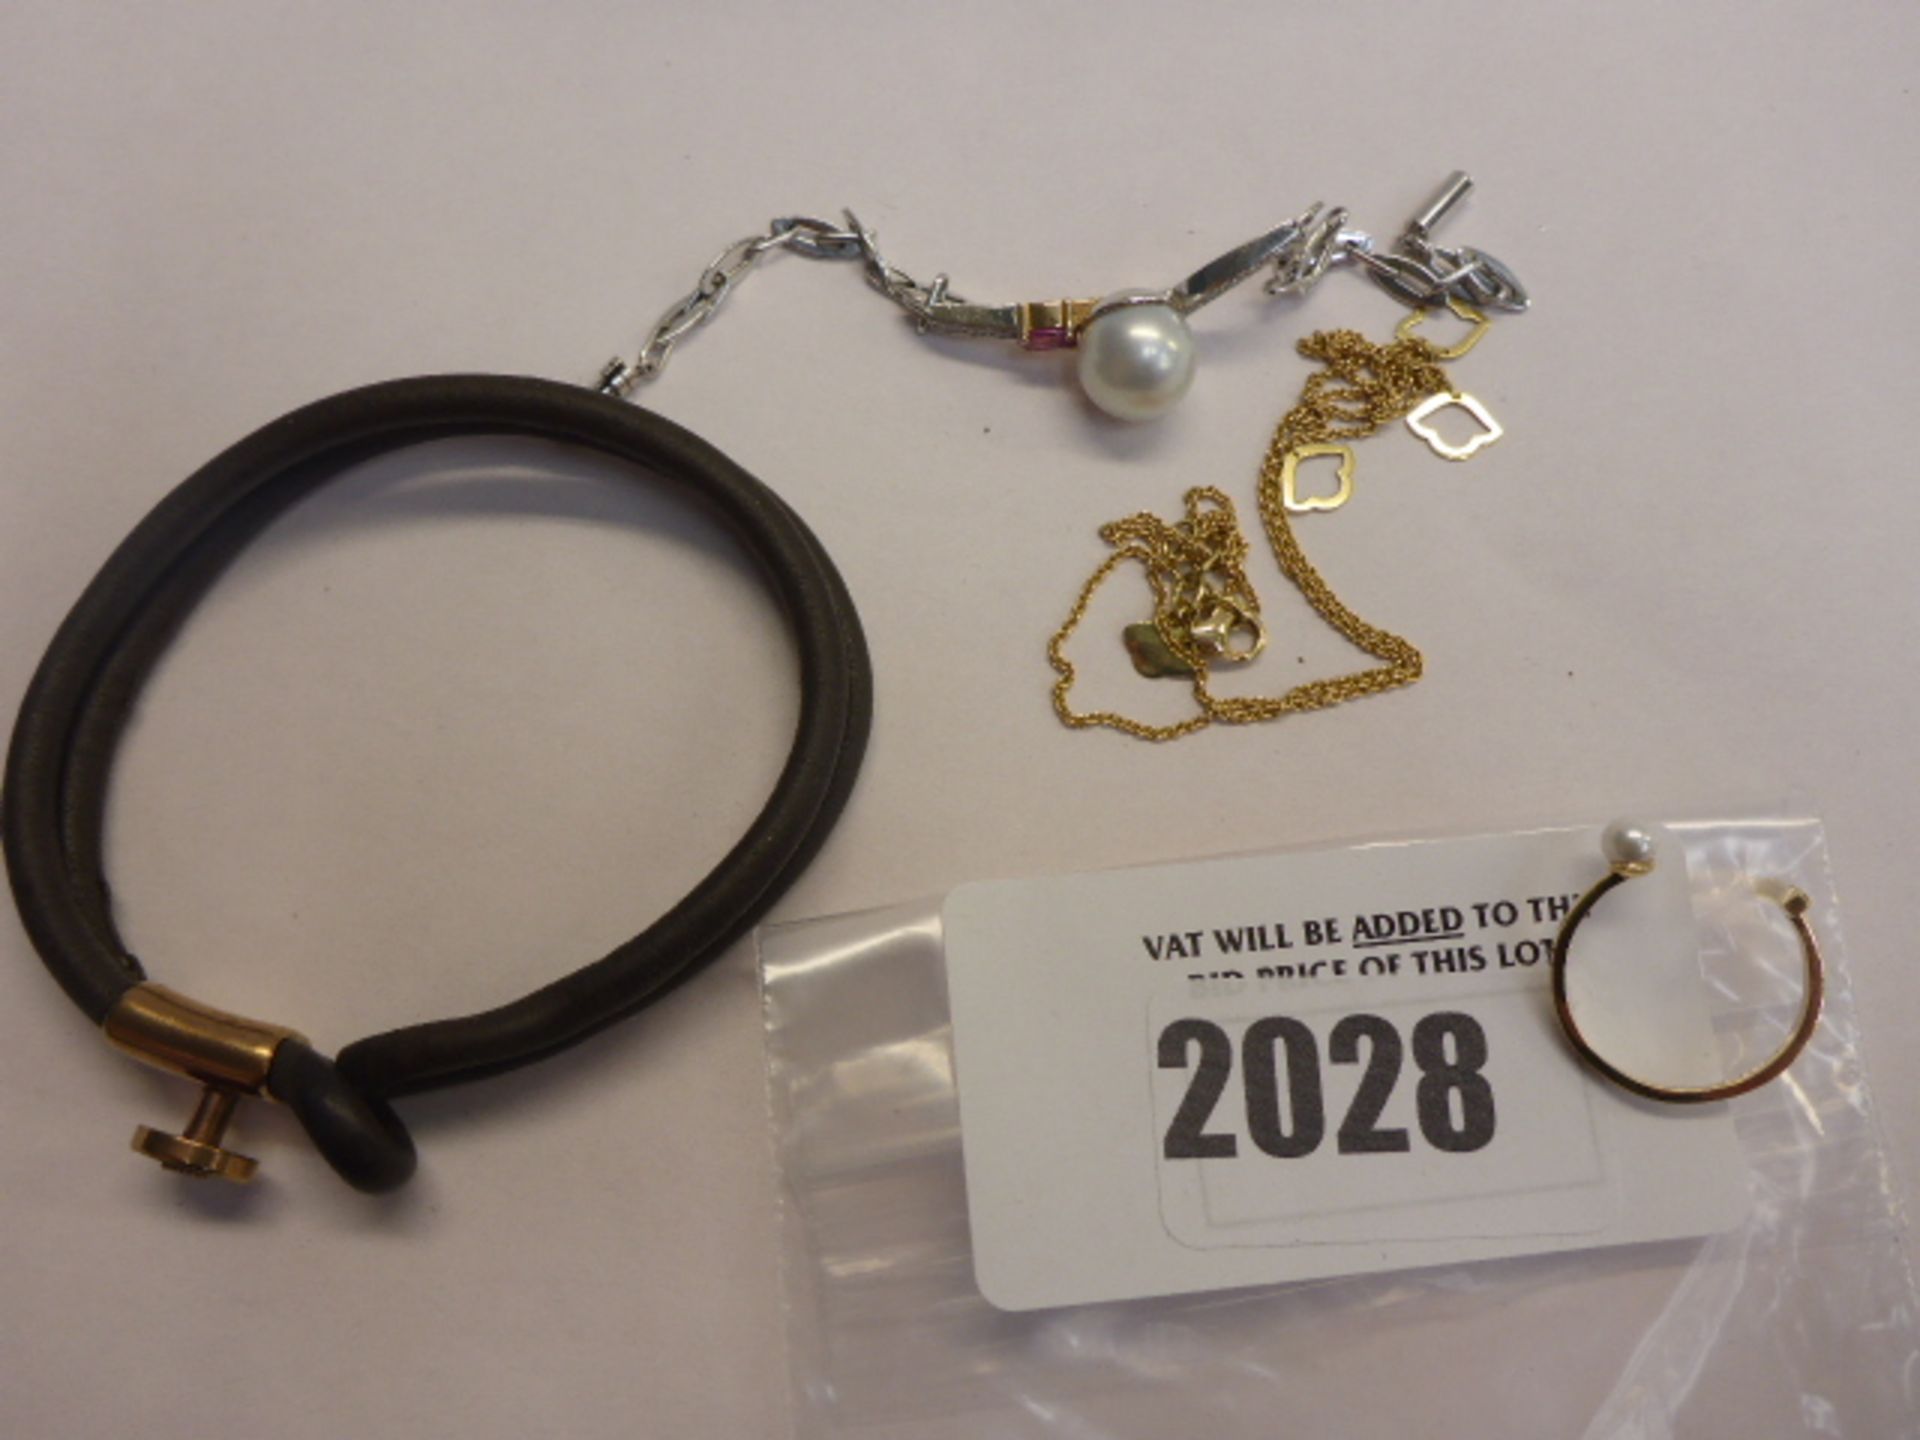 Amrapali 18k necklace, 14k ring, gemmed bracelet and Emporio Armani bangle